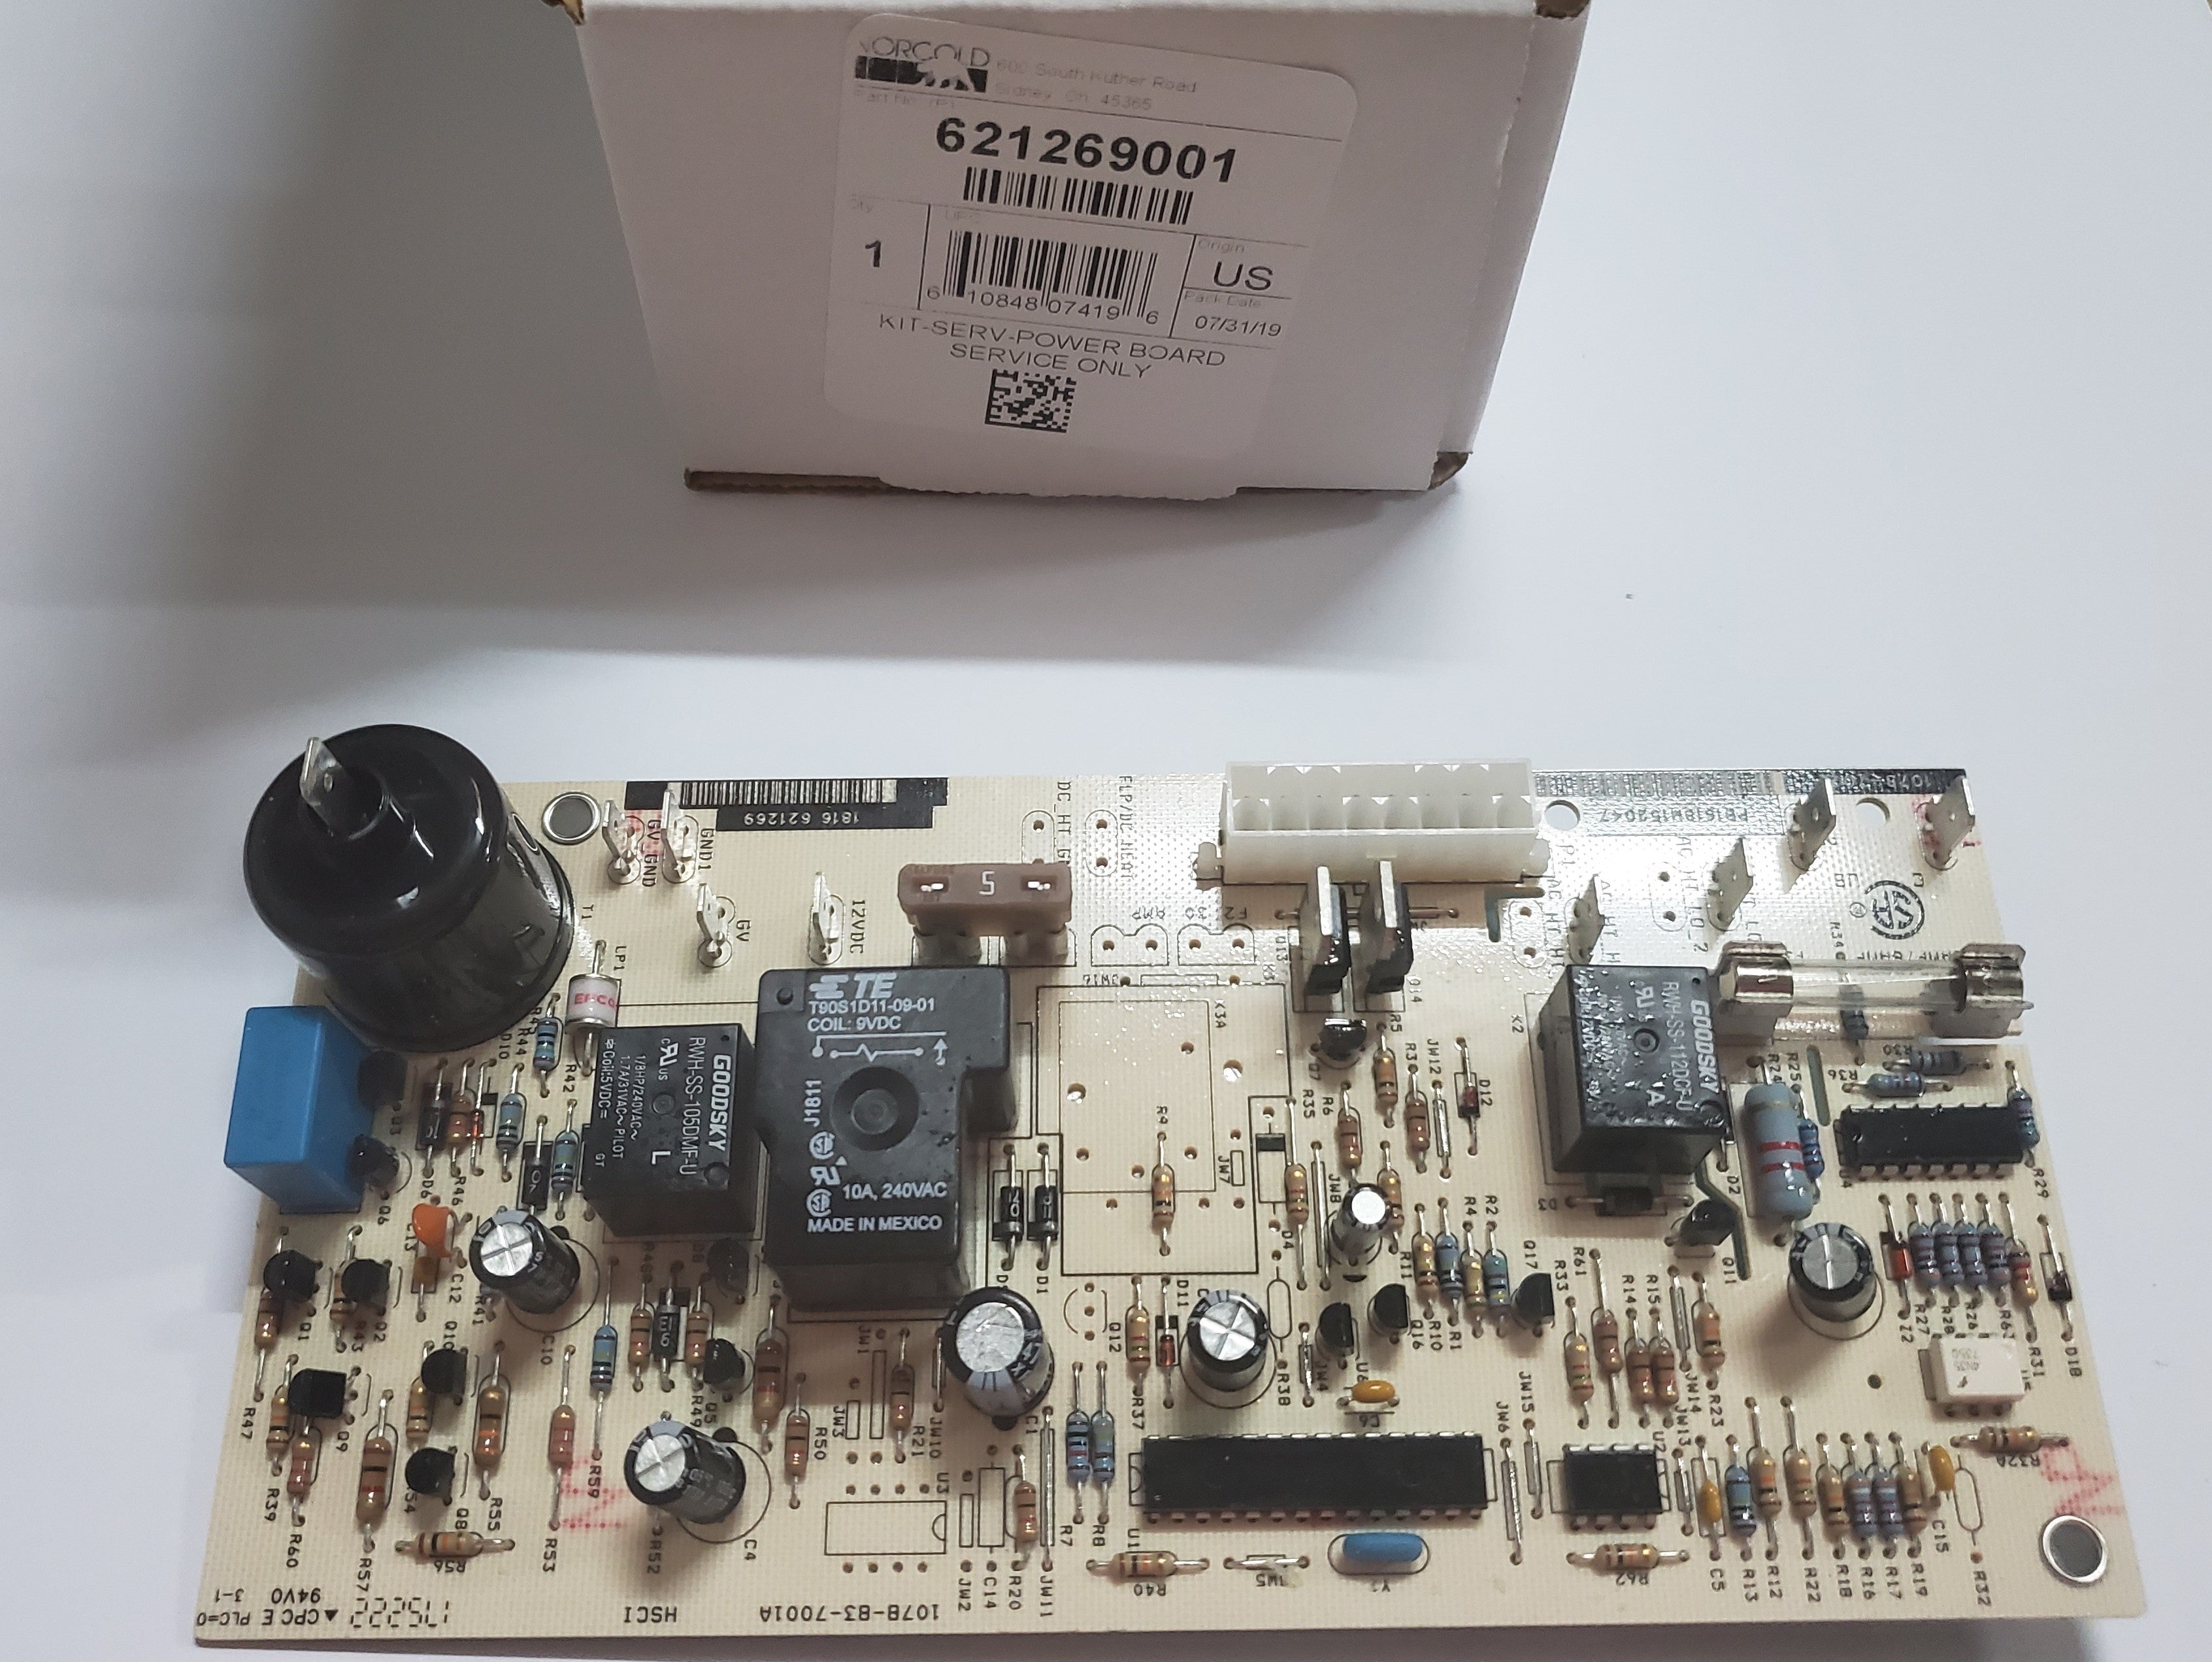 Norcold 621269001 N1095/N64X/N84X Refrigerator 2-Way Power Supply Board